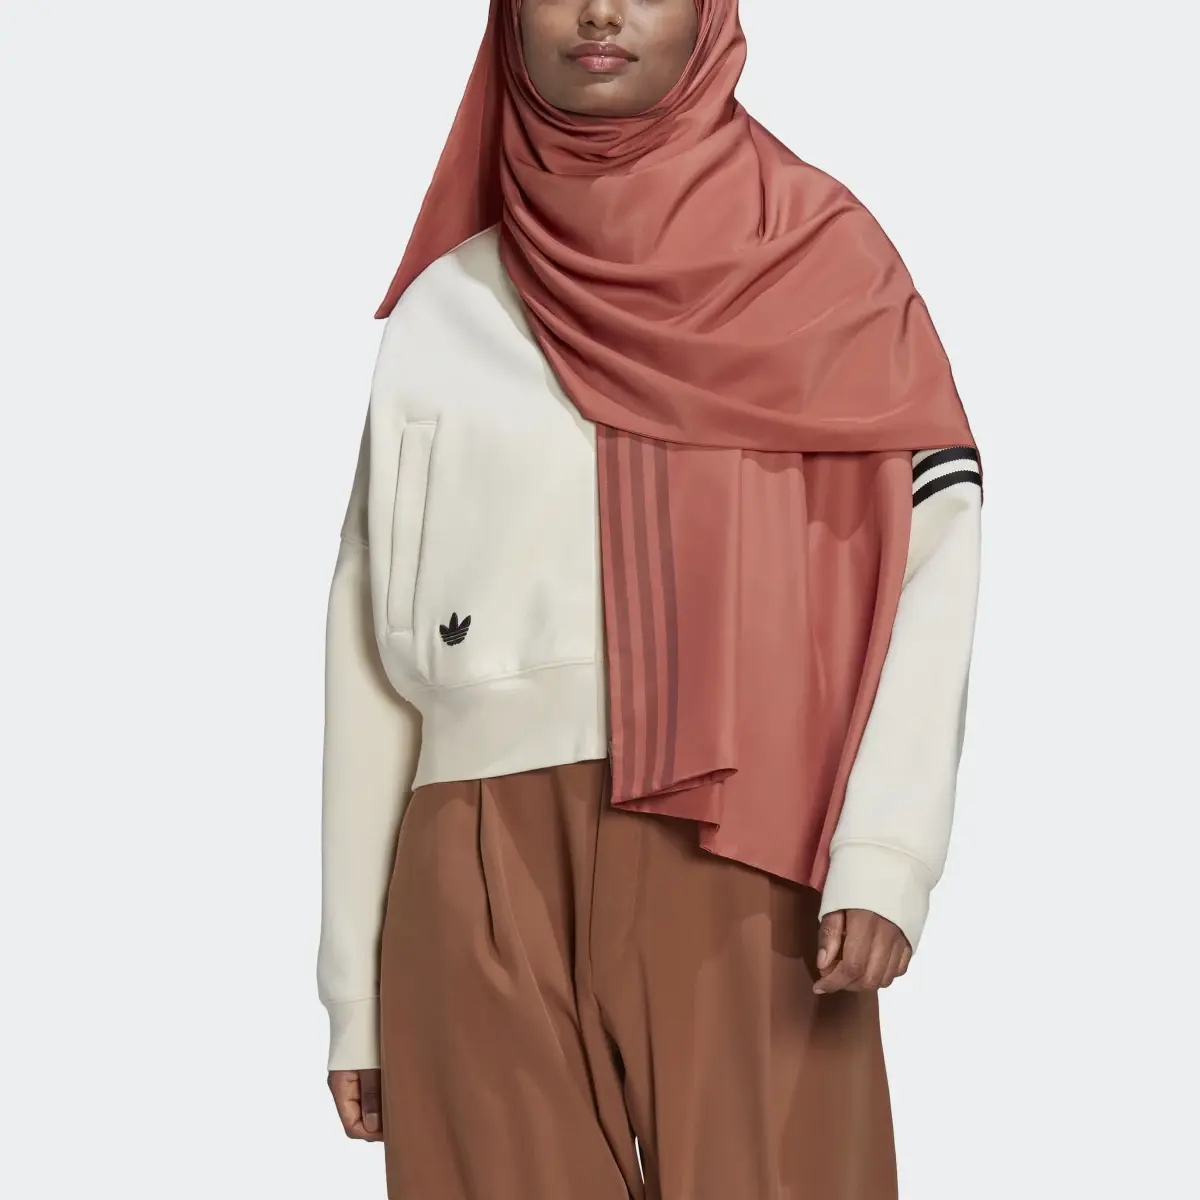 Adidas Hijab. 1